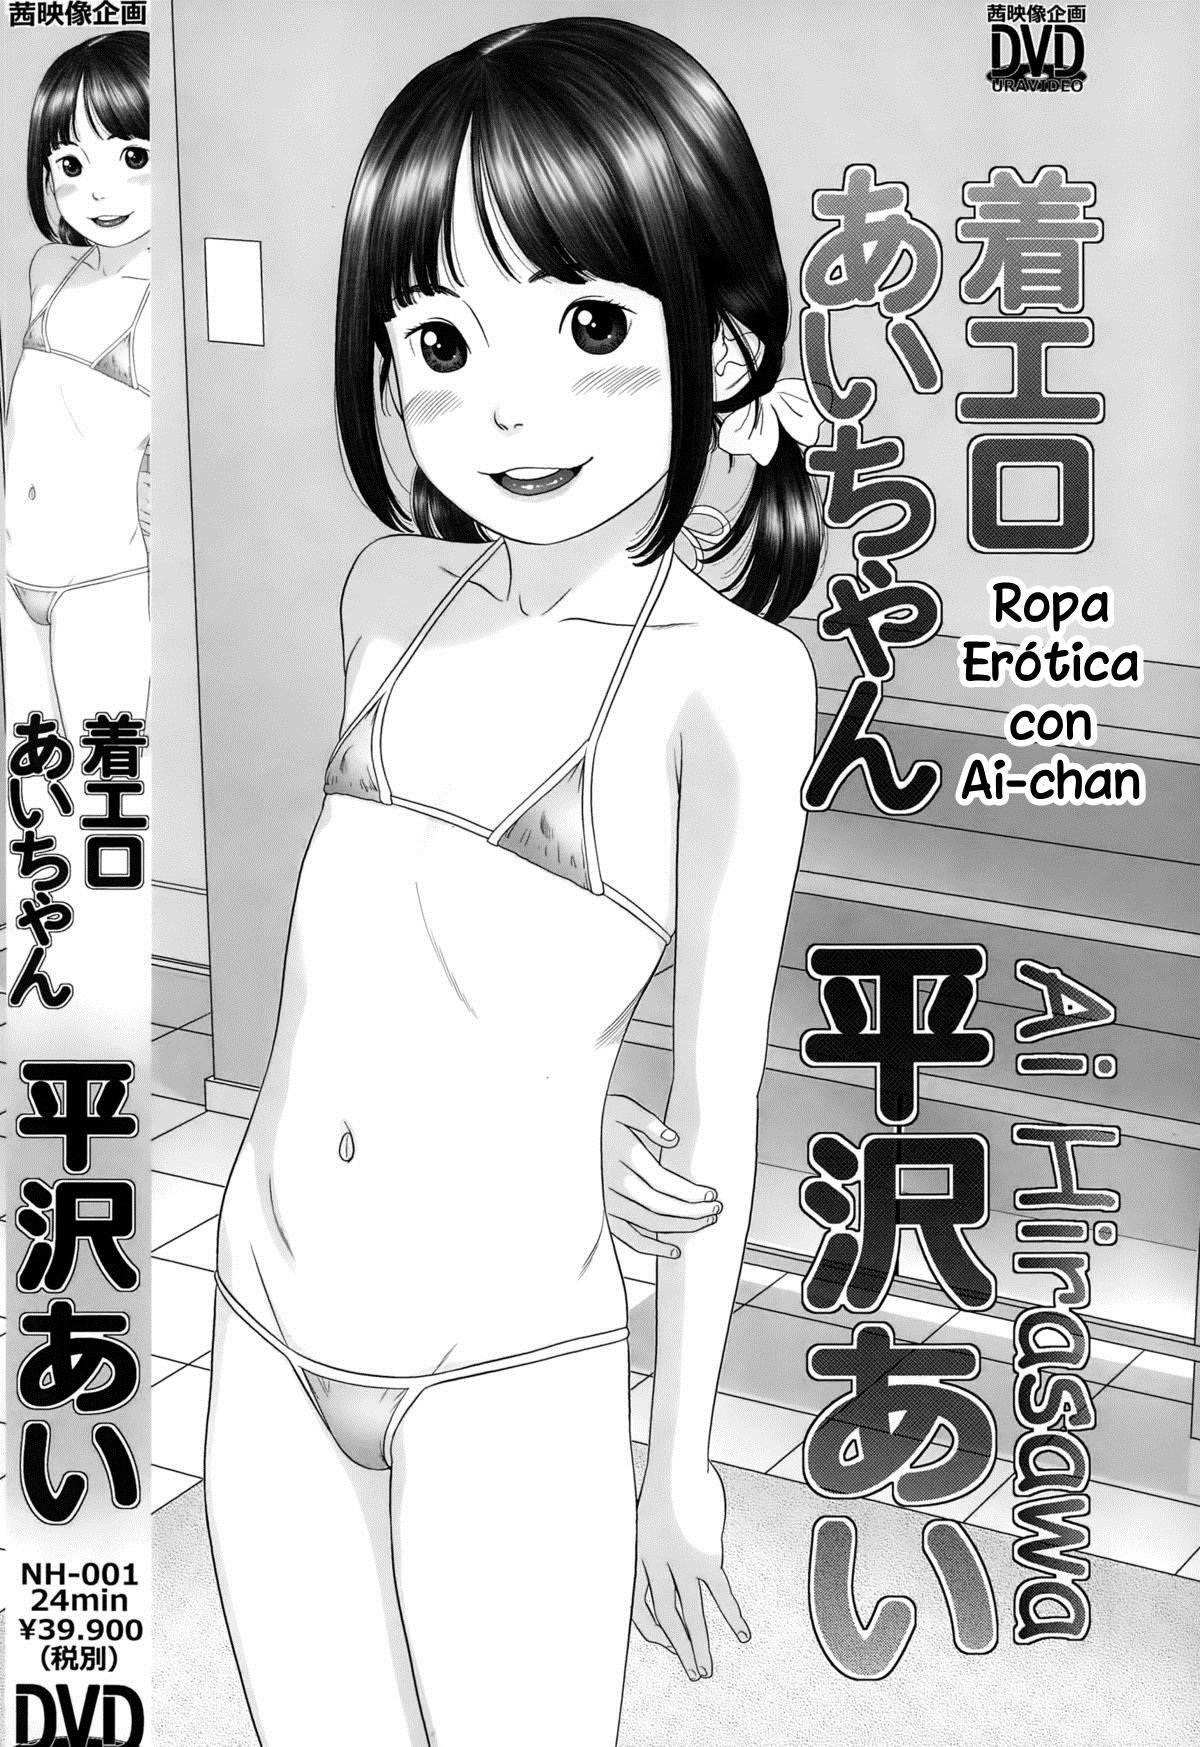 Chaku Ero Ai-chan Ropa Erotica con Ai-chan - 0